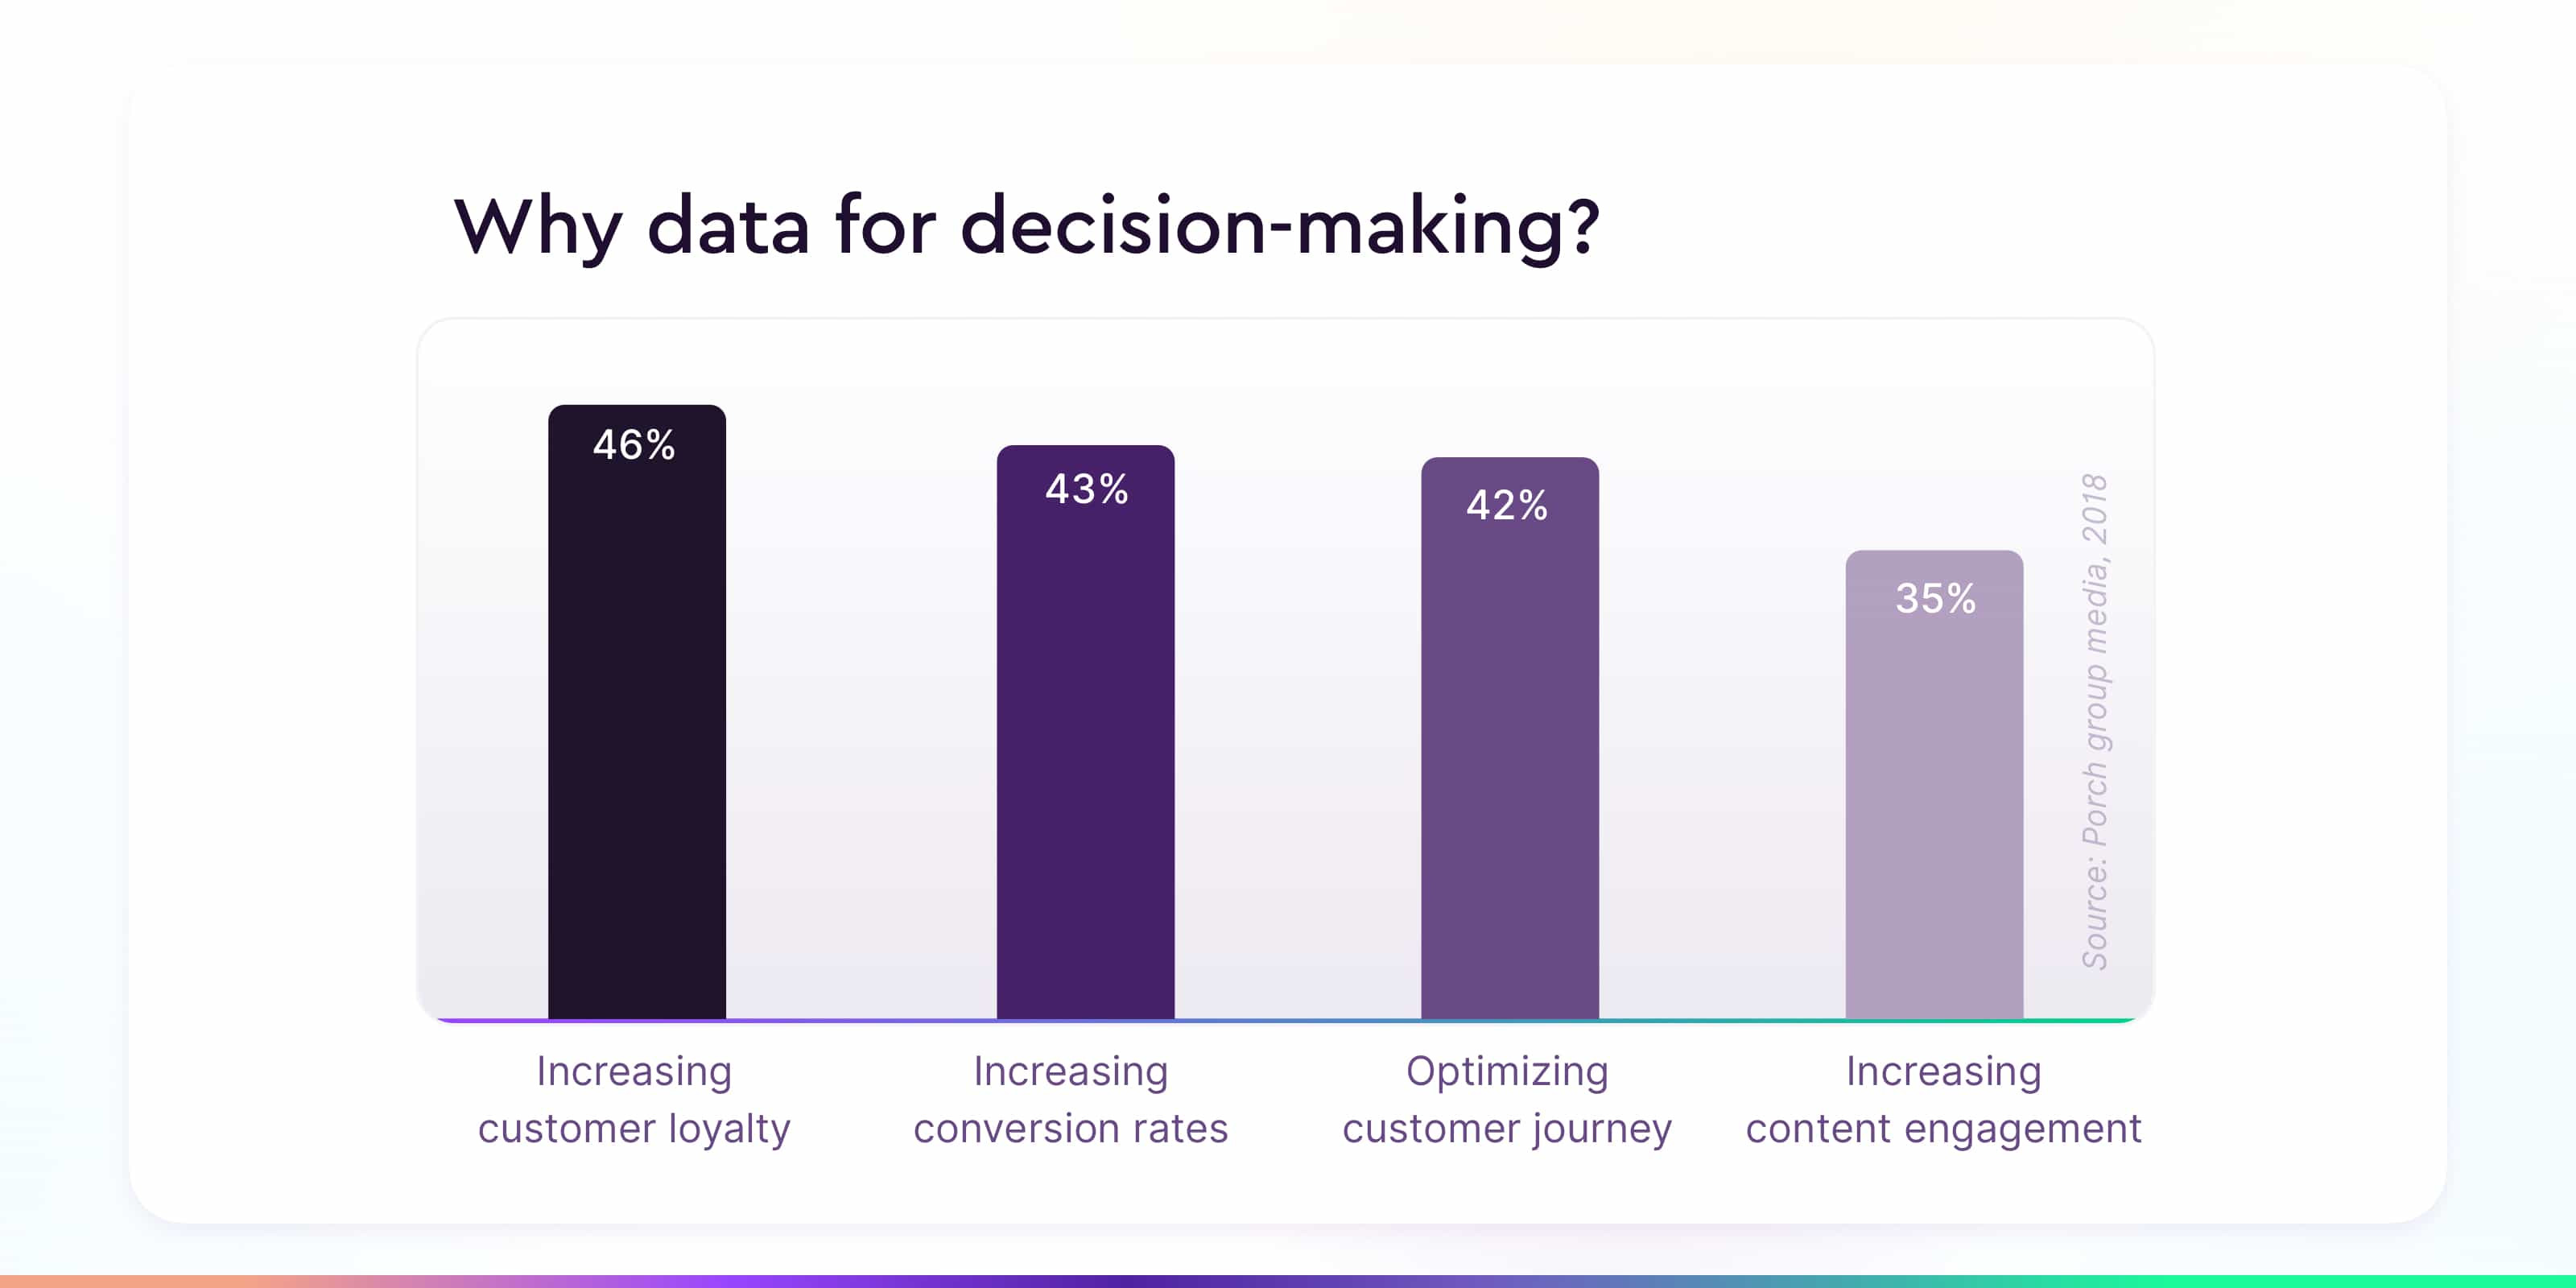 Goals of using customer journey analytics data for decision making